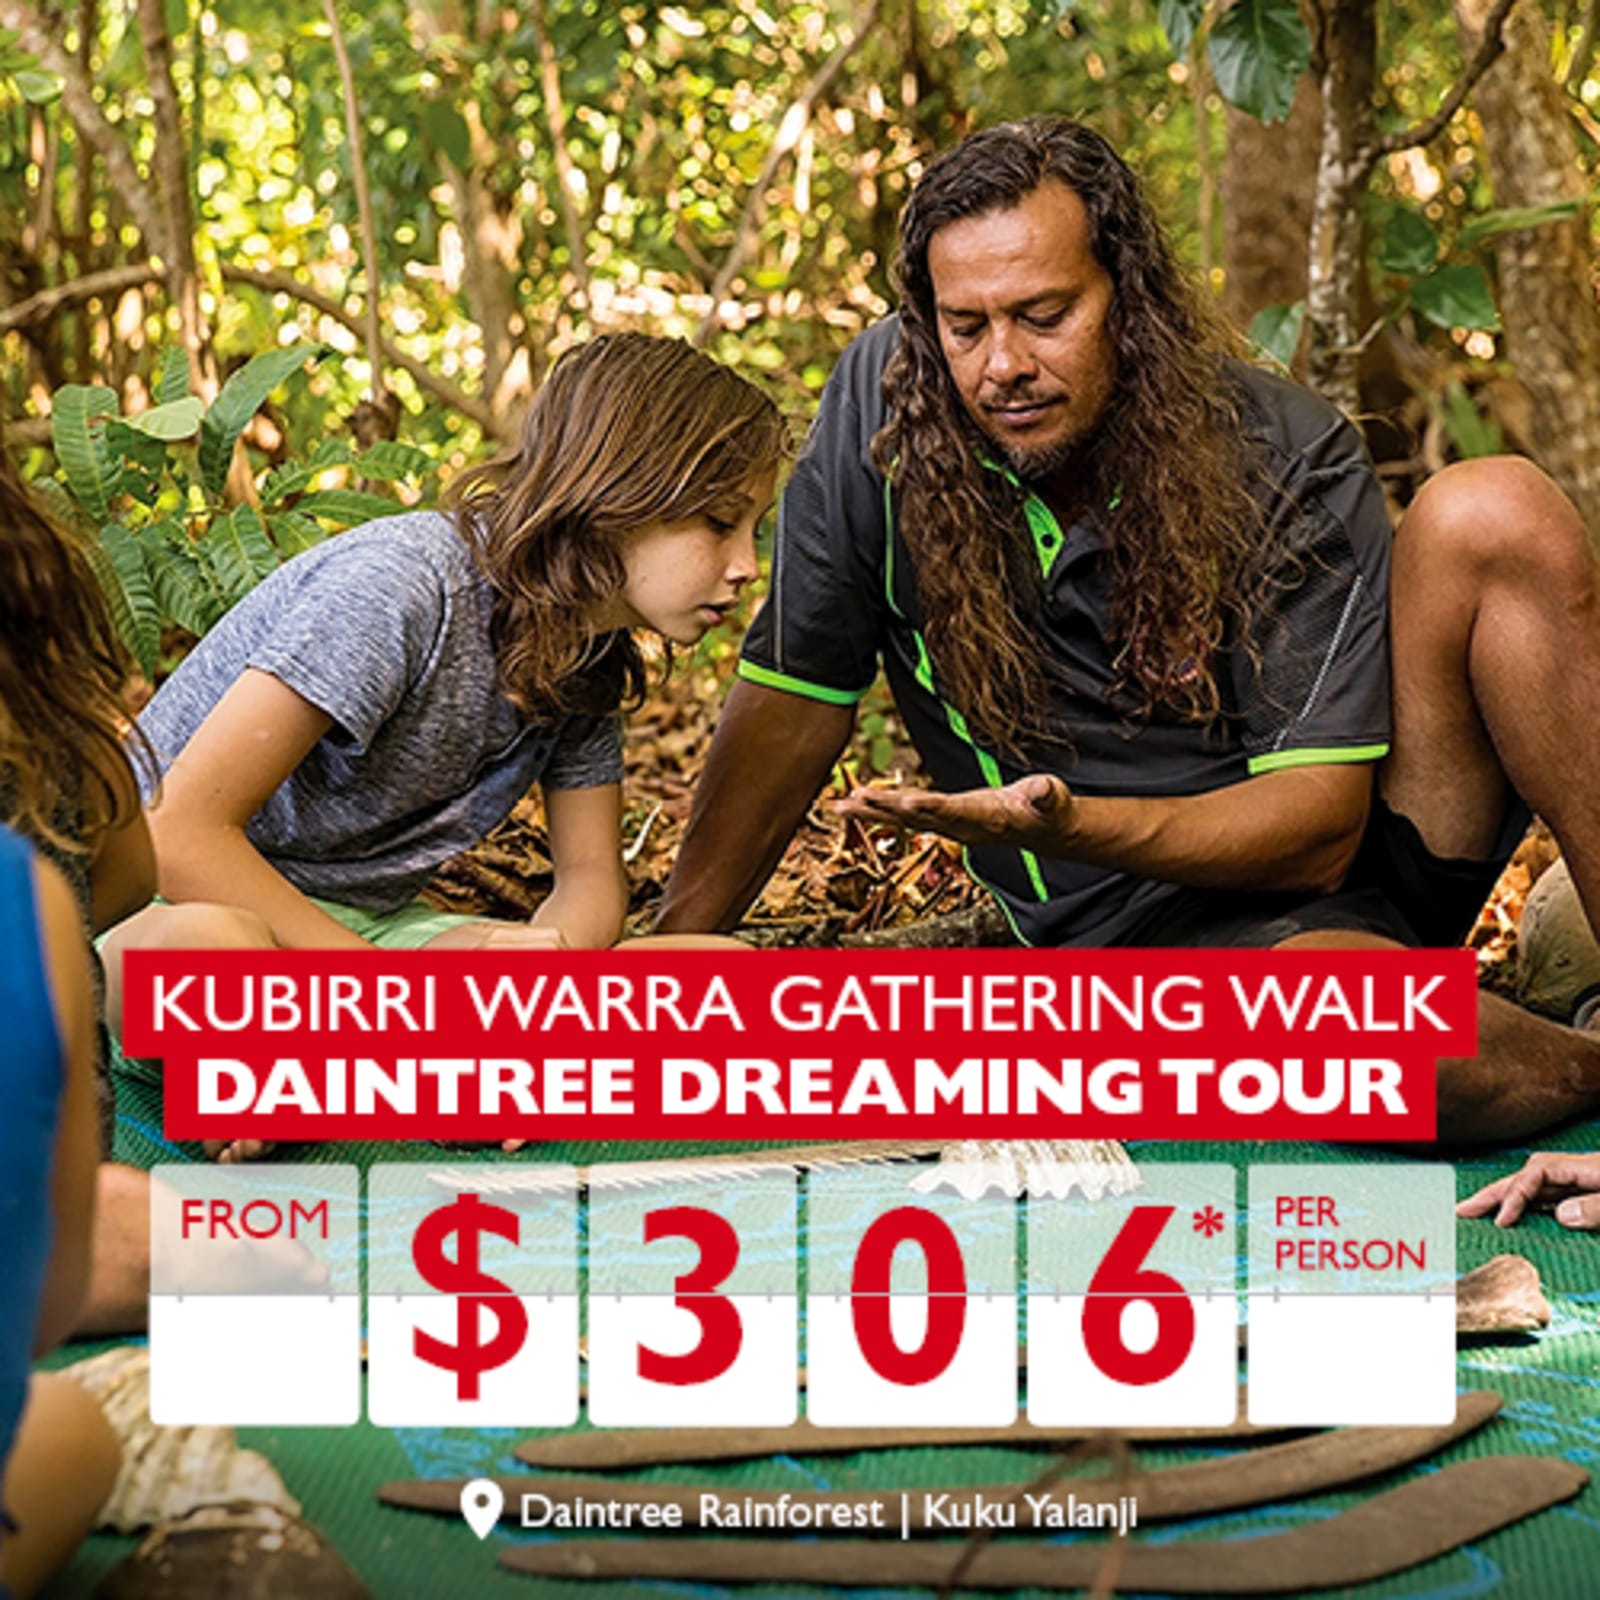 Kubirri Warra Gathering Walk | Daintree dreaming tour from $306* per person